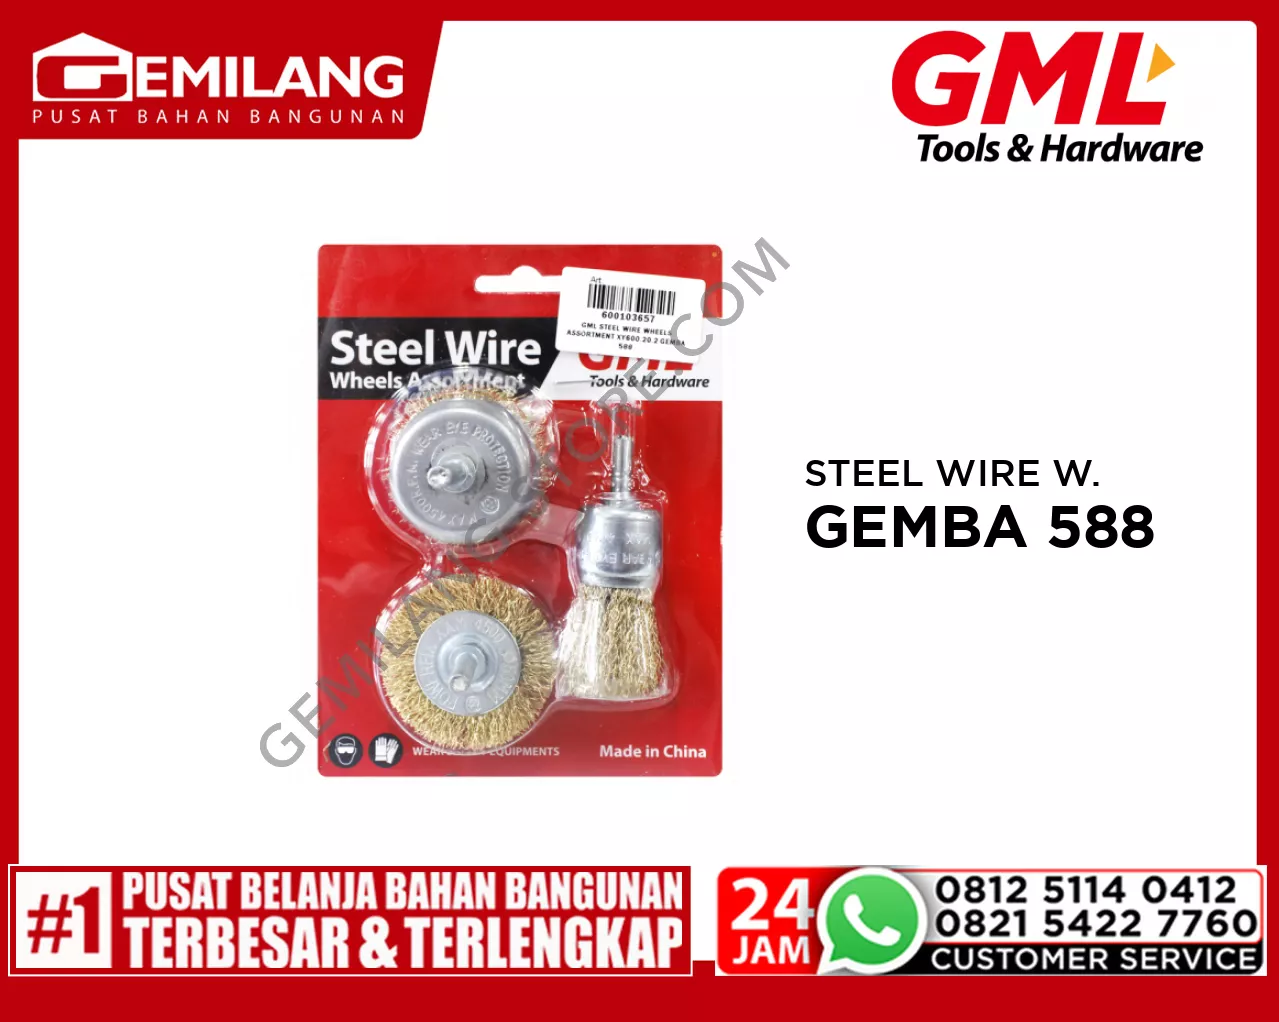 GML STEEL WIRE WHEELS ASSORTMENT XY600.20.2 GEMBA 588